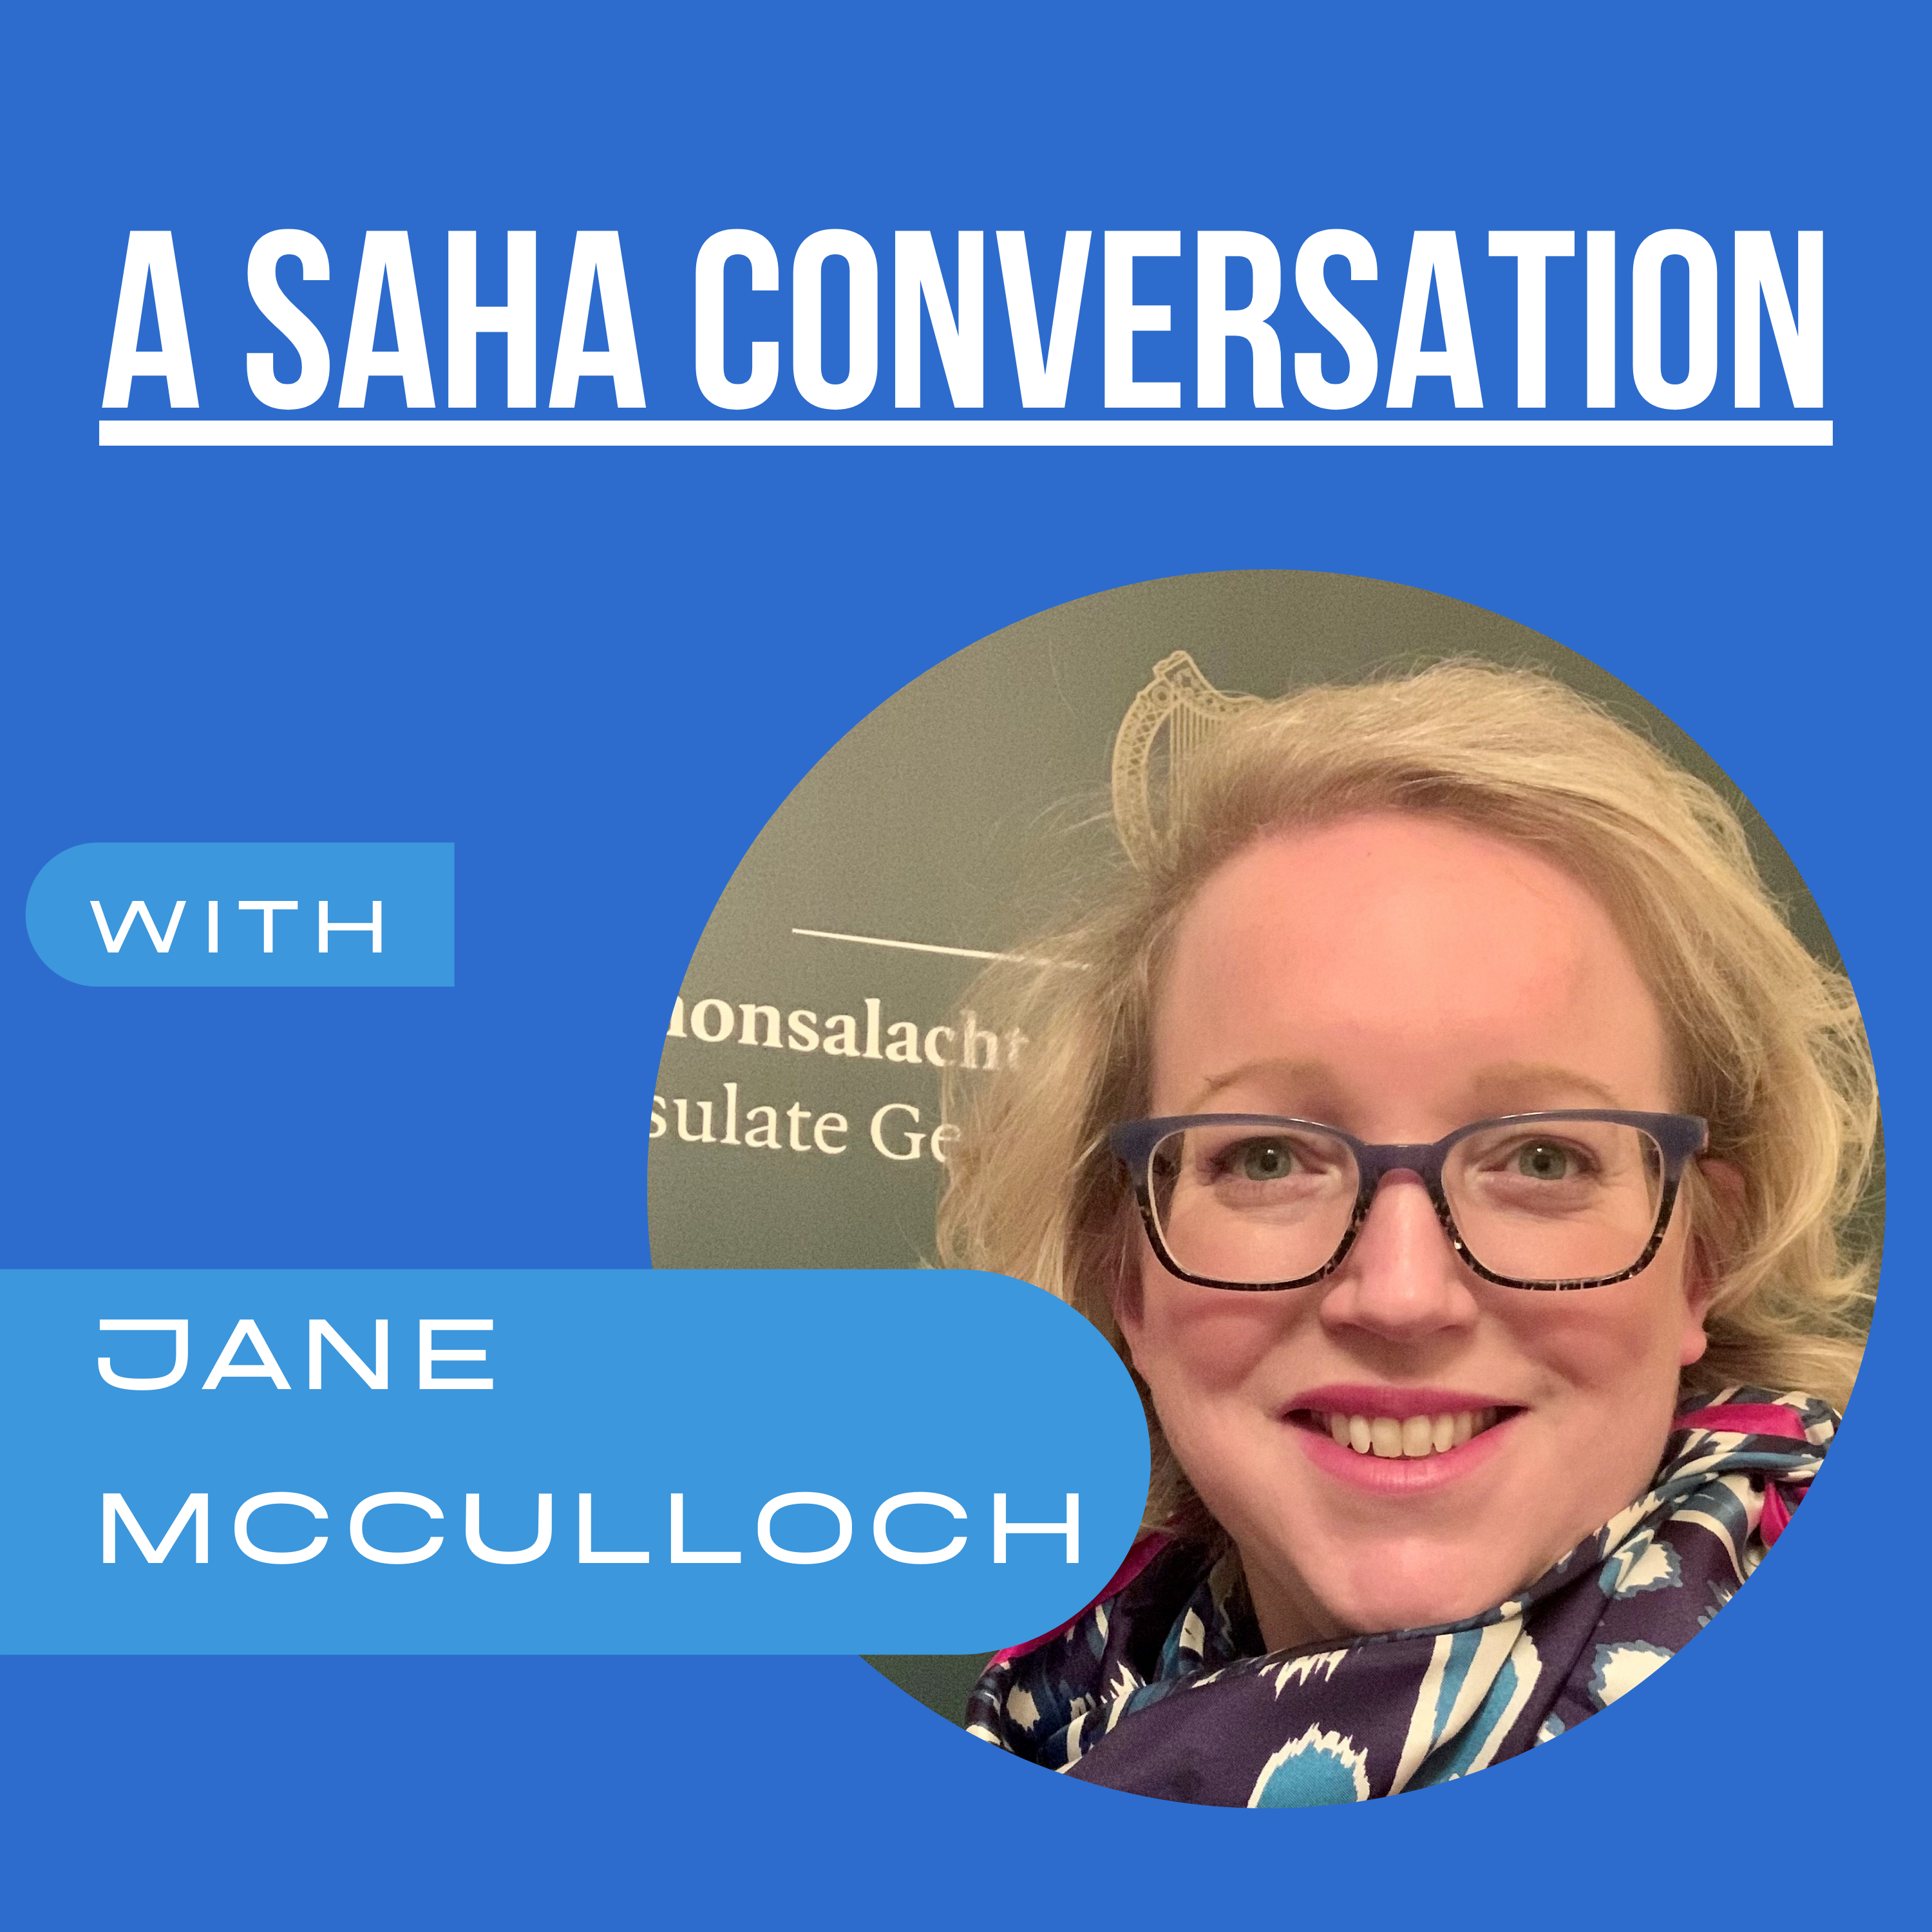 A SAHA Conversation with Jane McCulloch